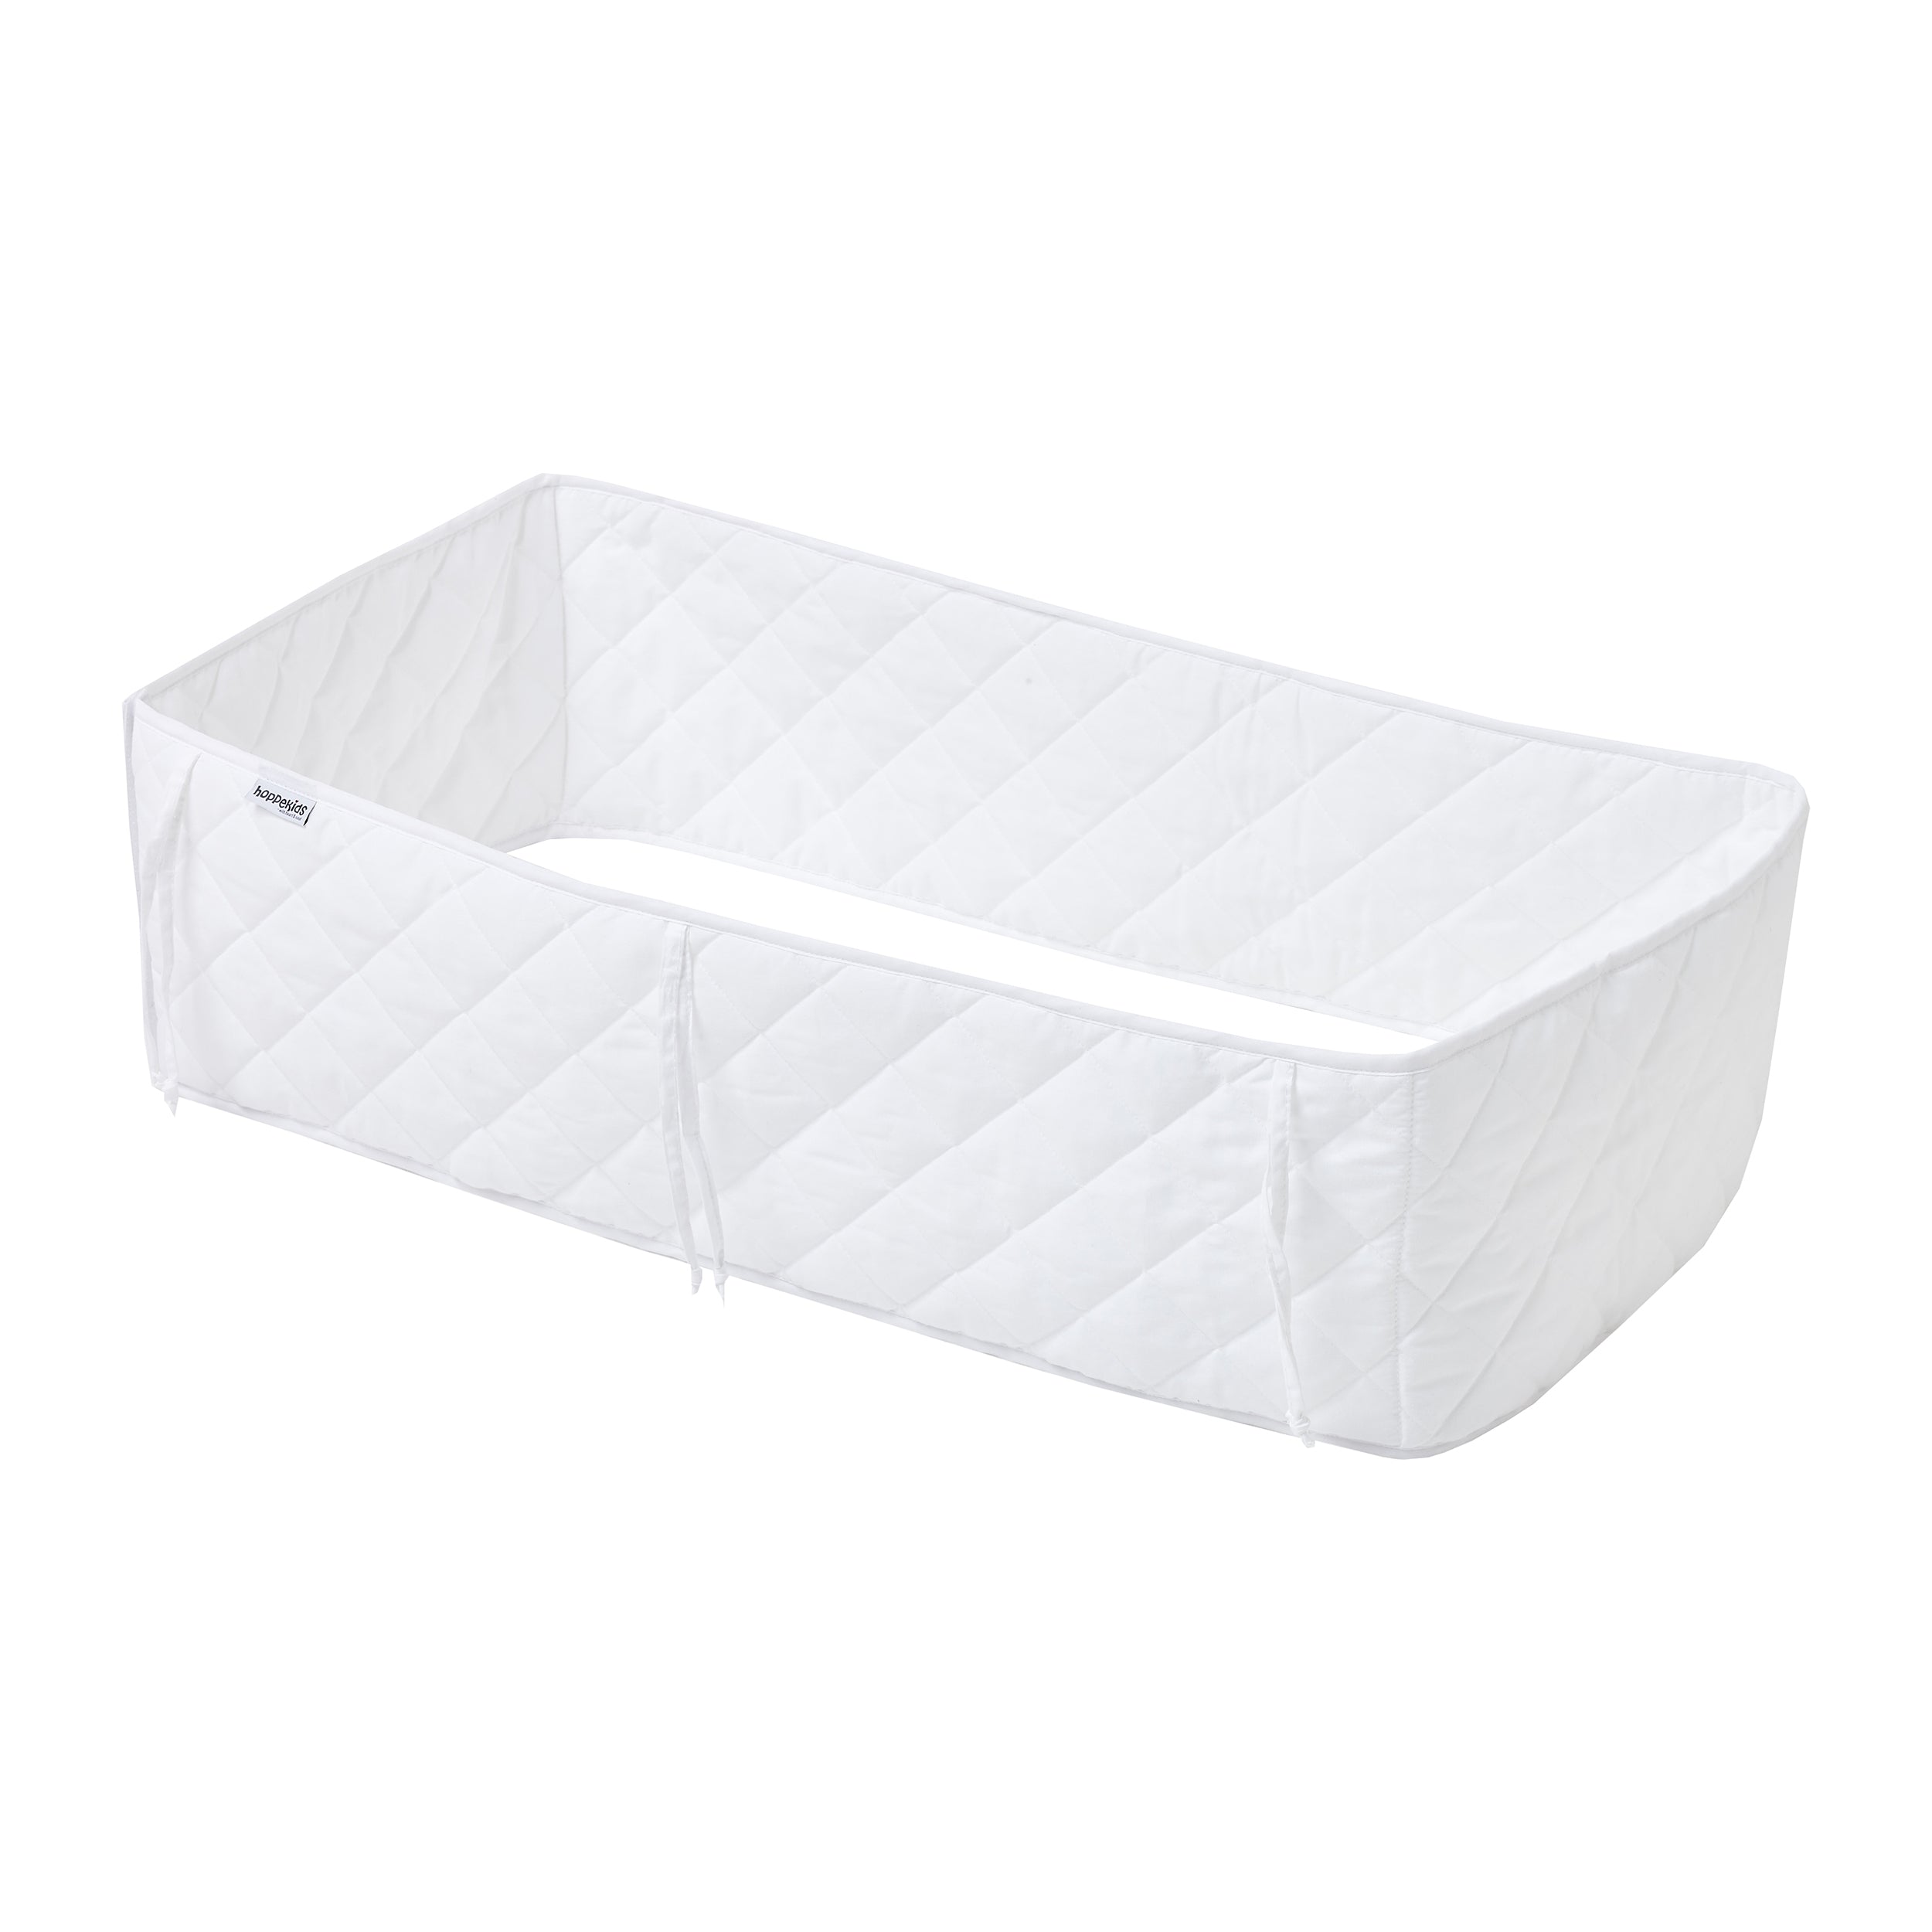 Hoppekids Quilted bed bumper 60x120 cm, White